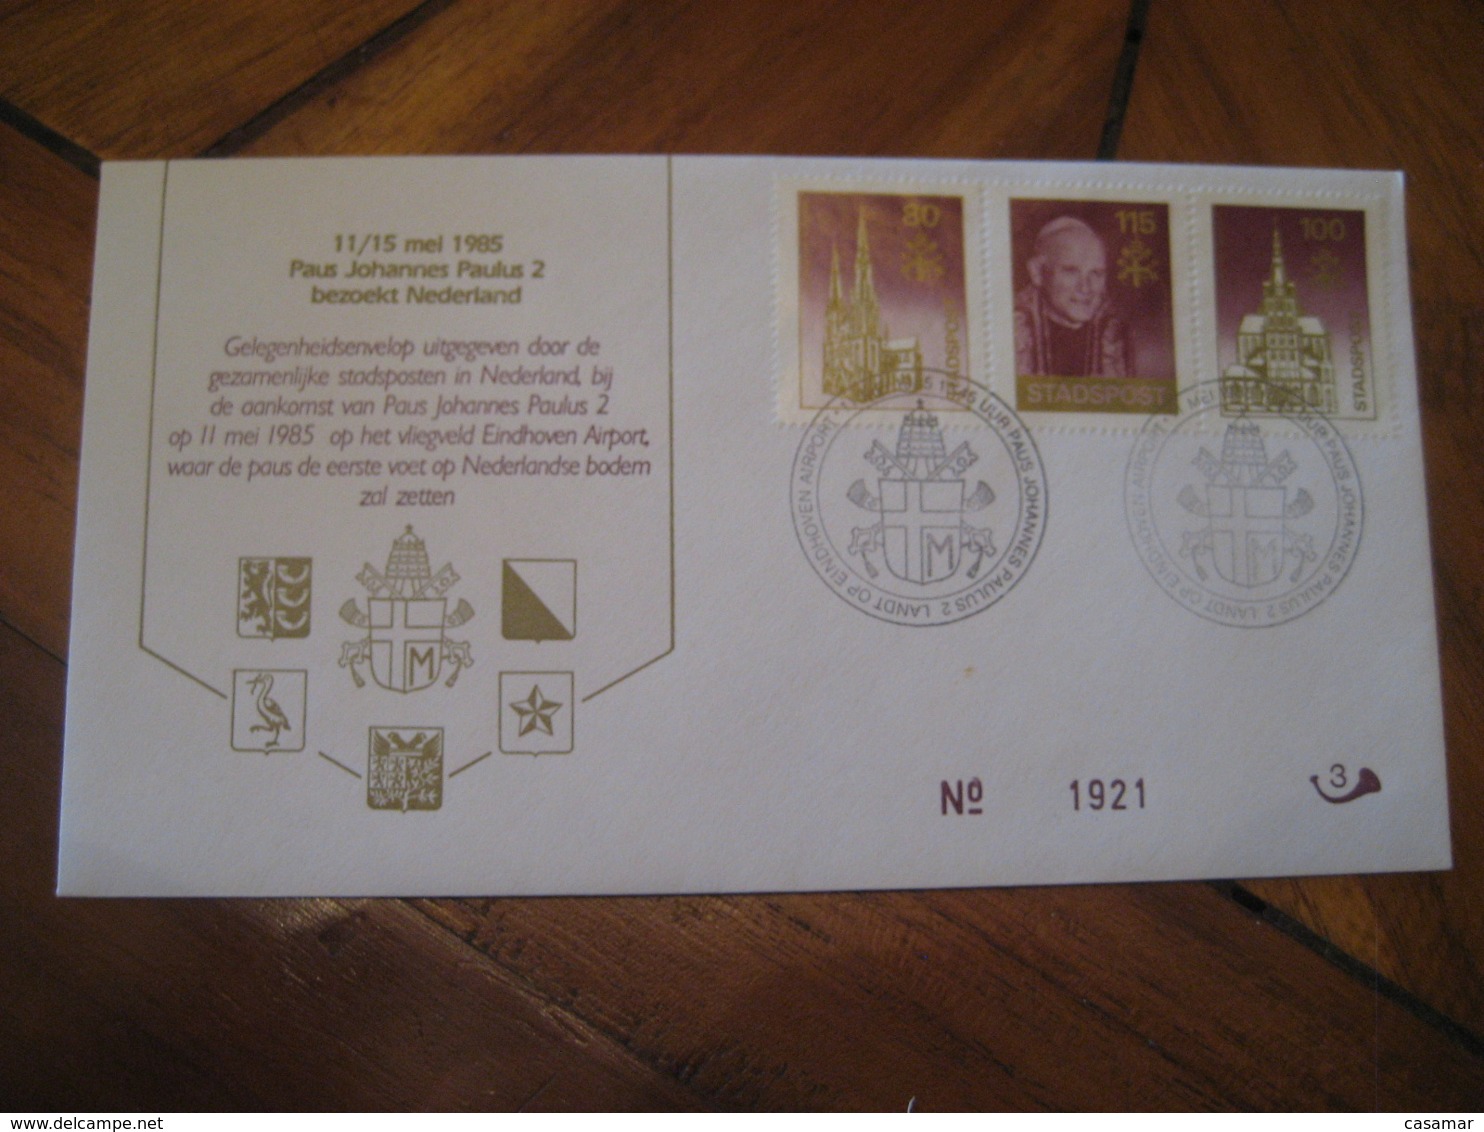 EINDHOVEN Airport 1985 John Paul II Pope Visit Cancel STADSPOST 3 Local Private Stamp On Cover NETHERLANDS Holland - Personalisierte Briefmarken